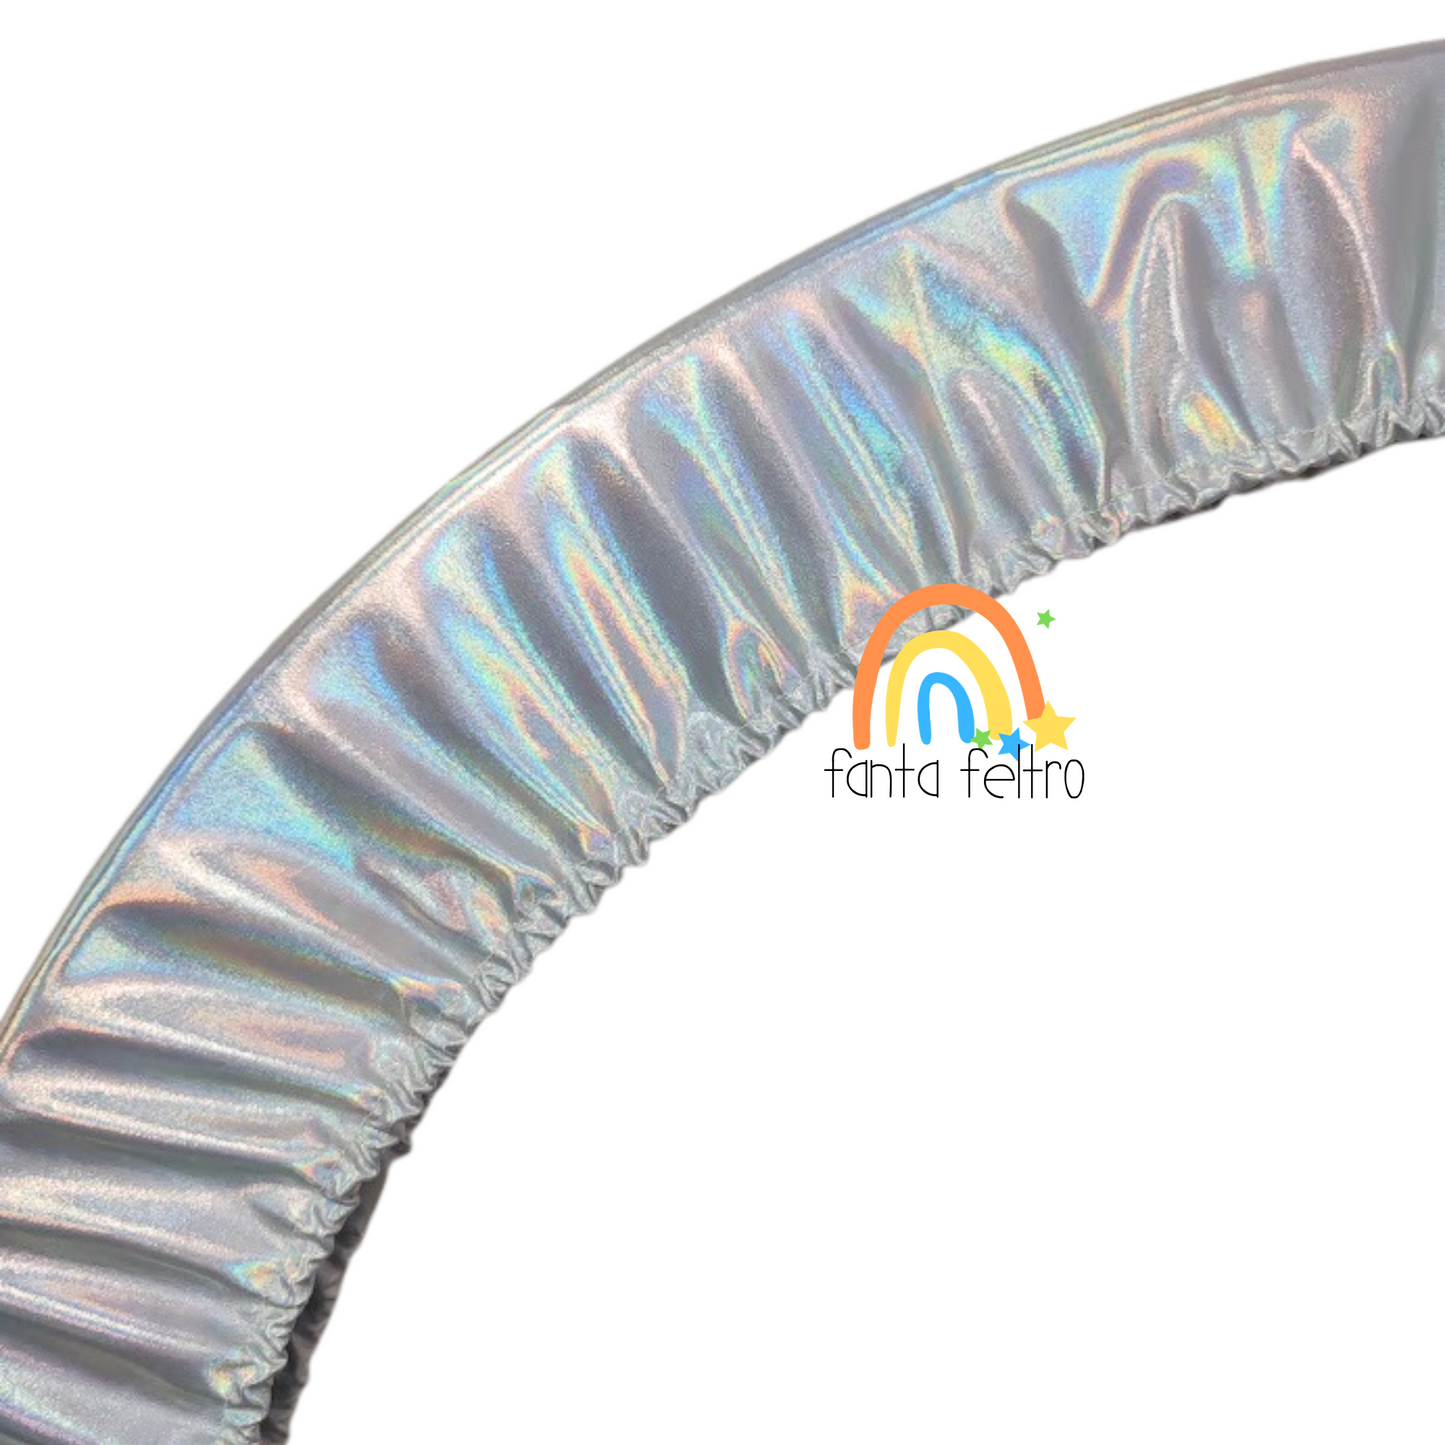 Iridescent metallic silver wheel cover